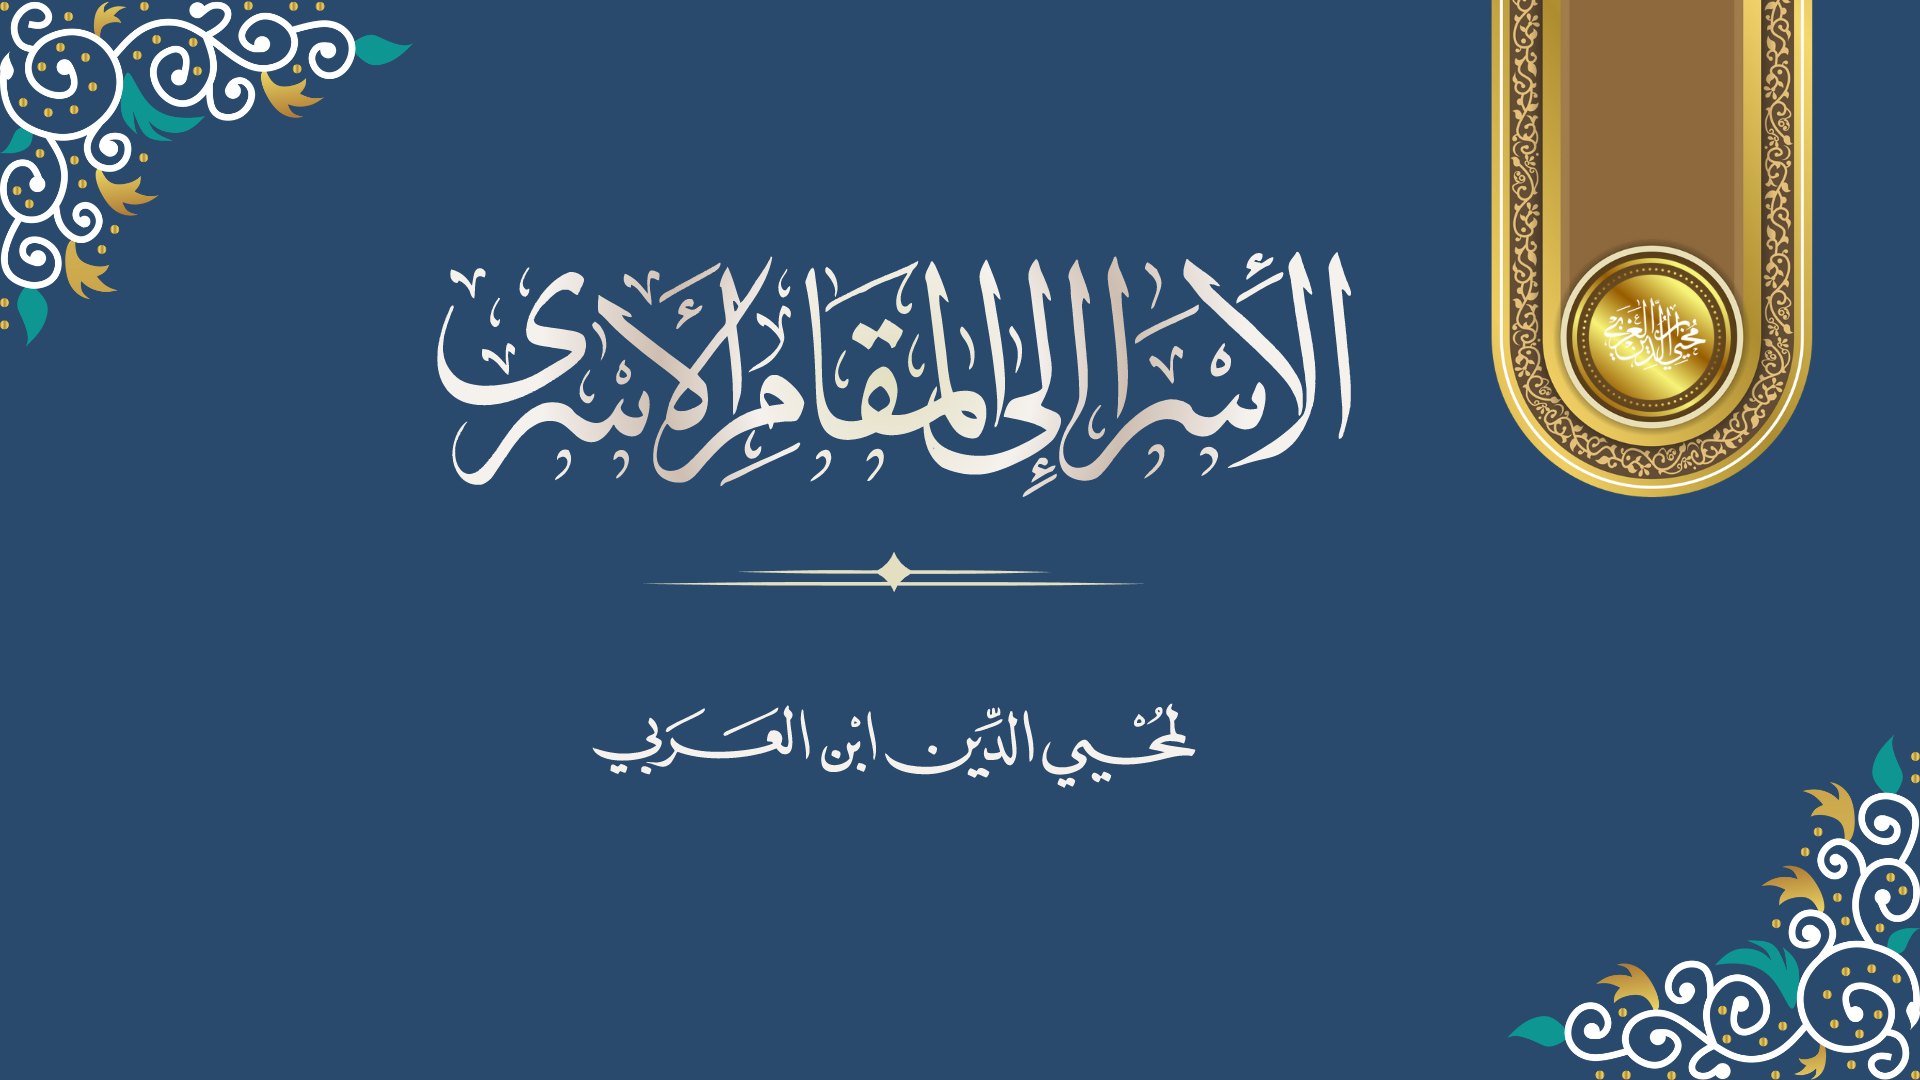 Kitab al Israa Funding - Ibn al-Arabi Foundation March 22, 2023 Latest News [March 2023]